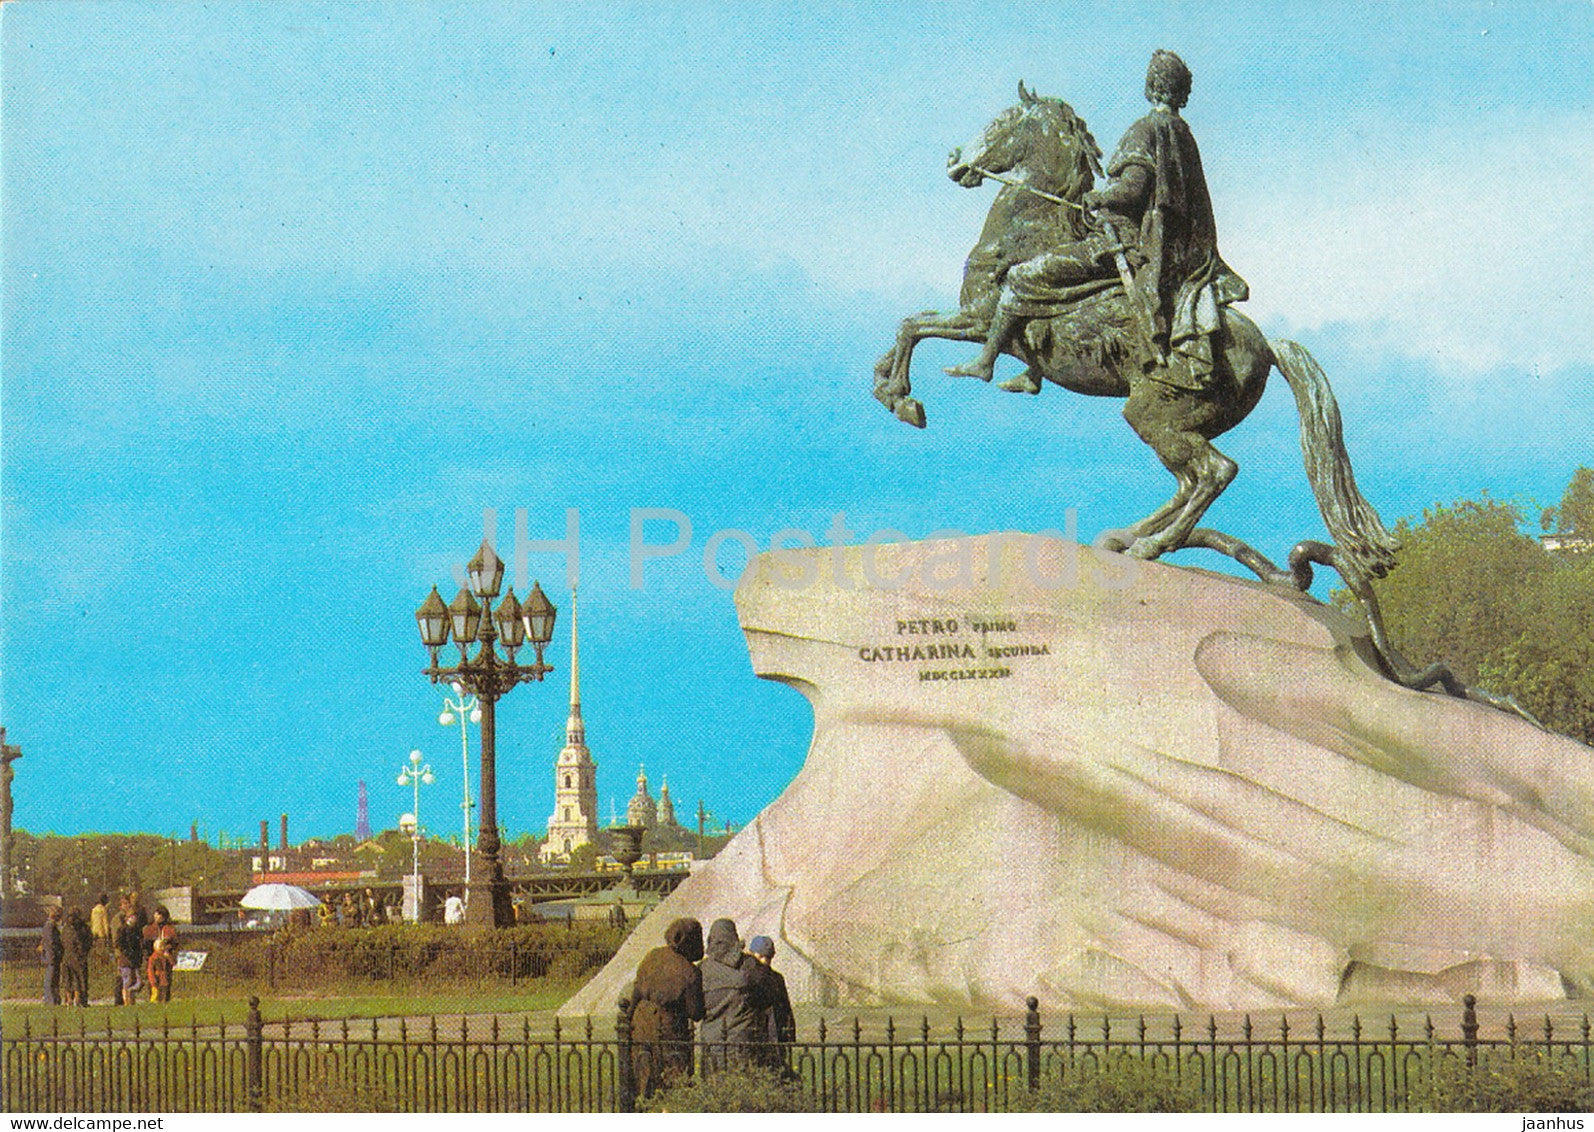 Leningrad - St Petersburg - monument to Peter I - horse - AVIA - postal stationery - 1982 - Russia USSR - unused - JH Postcards